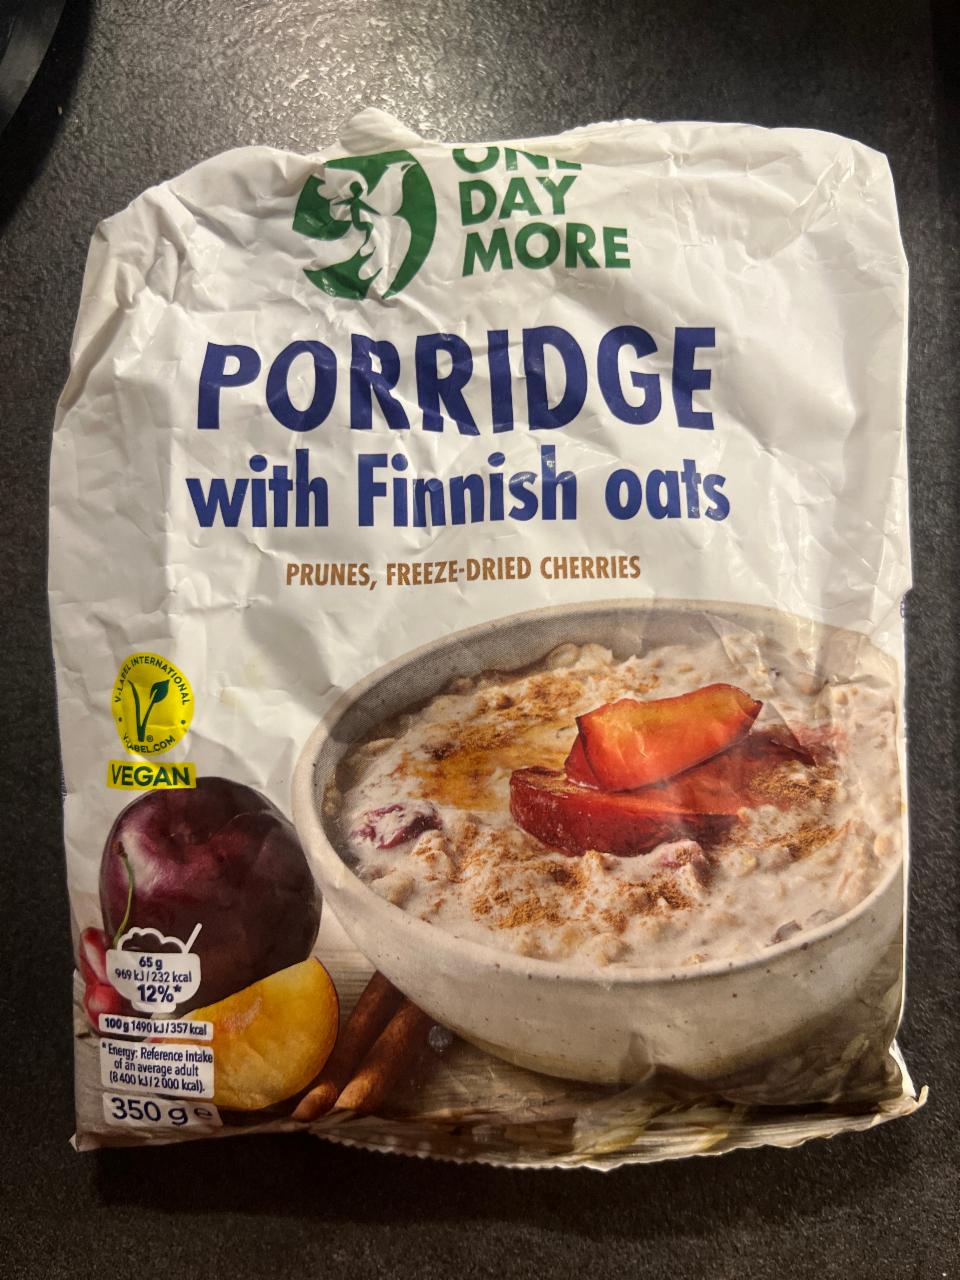 Zdjęcia - Porridge with Finnish oats prunes freeze-dried cherries One Day More